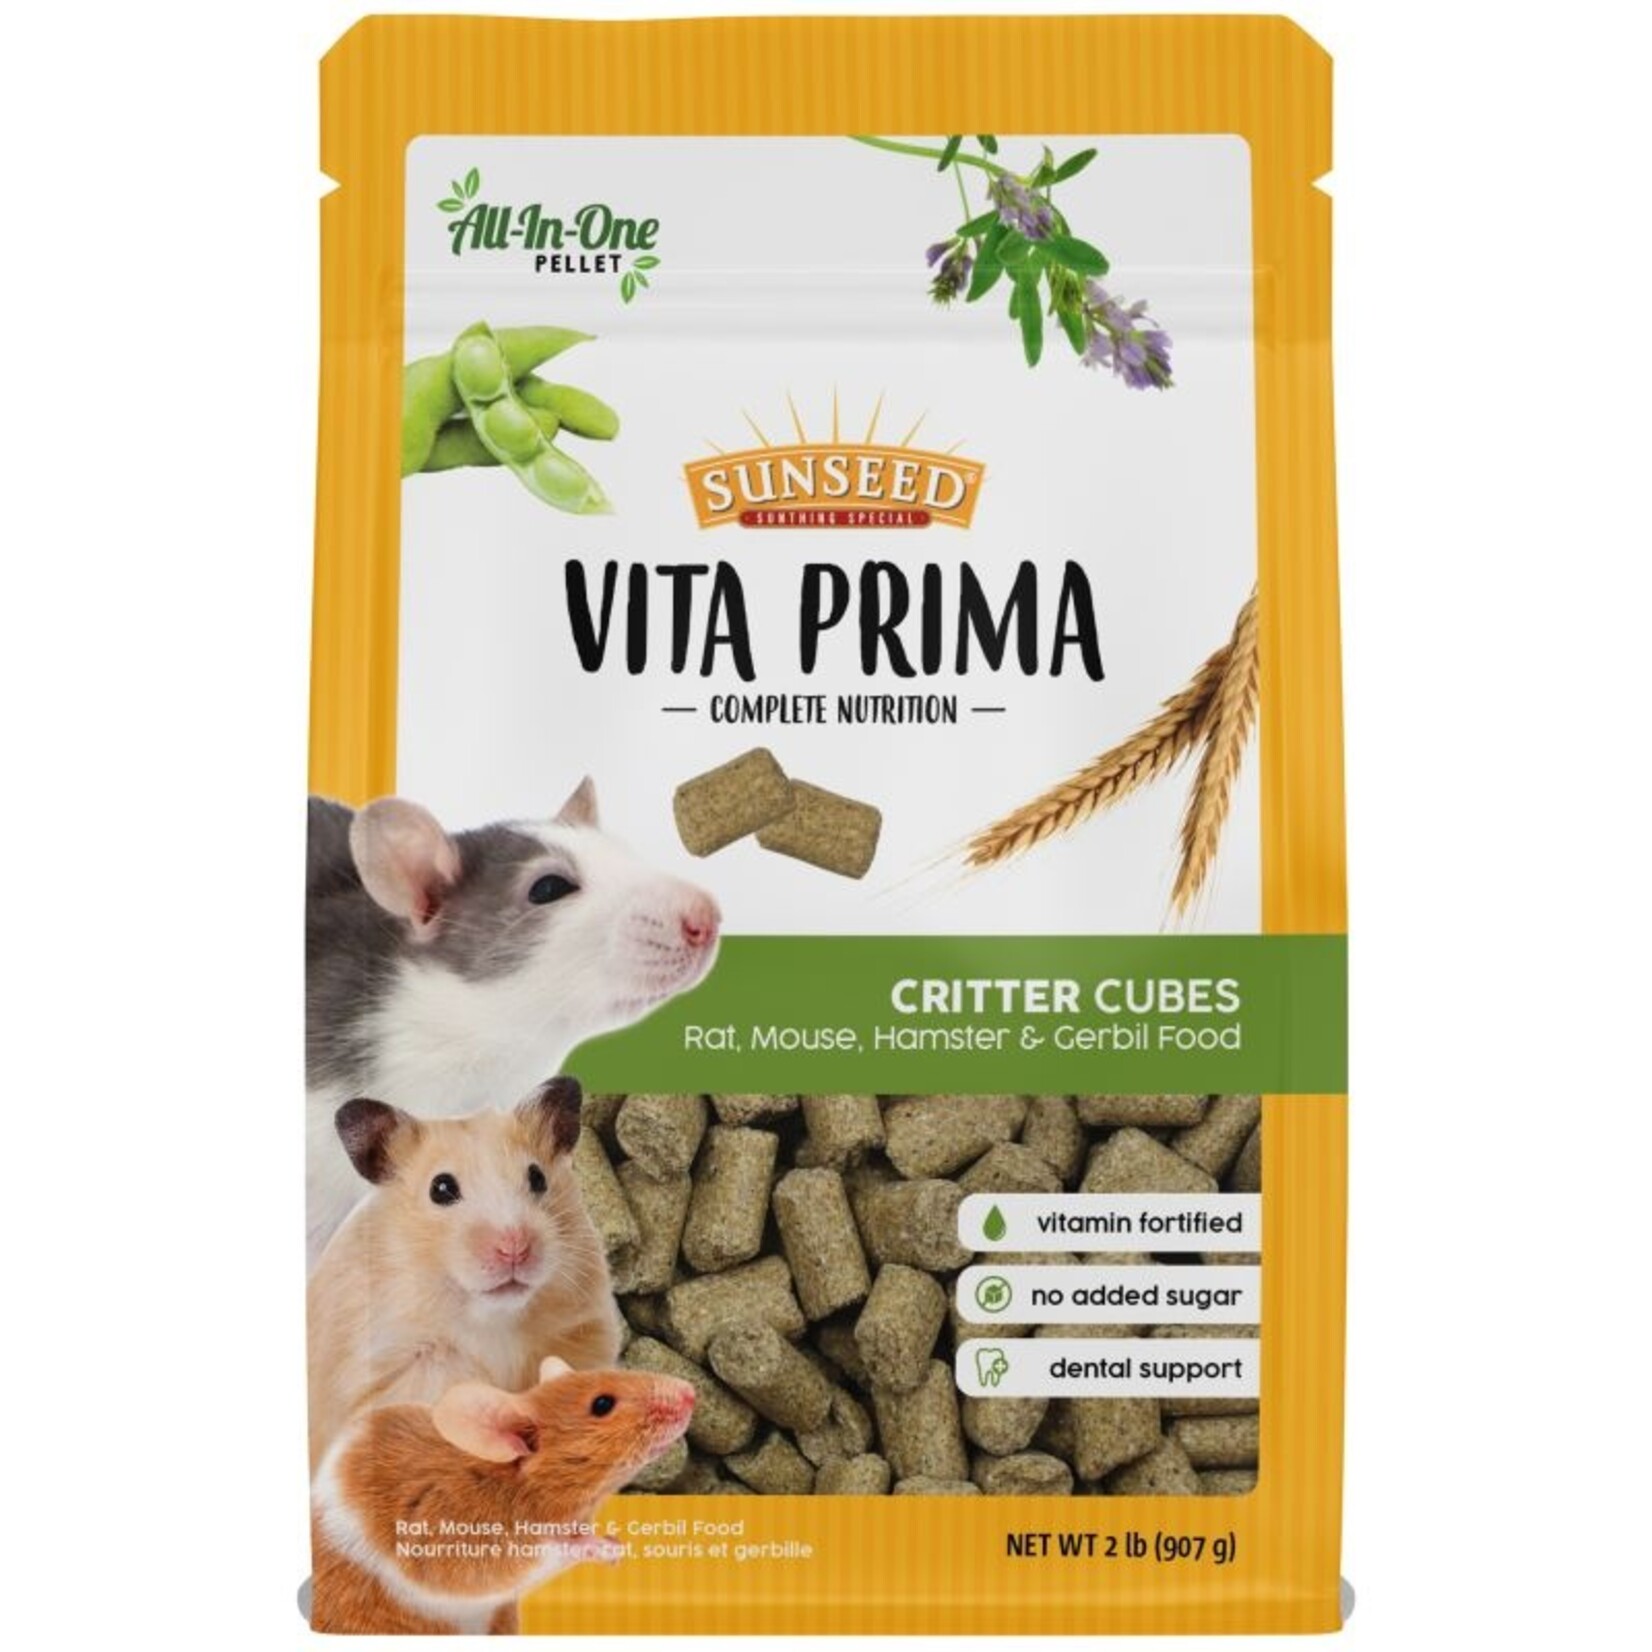 Sunseed Vita Prima Critter Cubes Food, 2lb